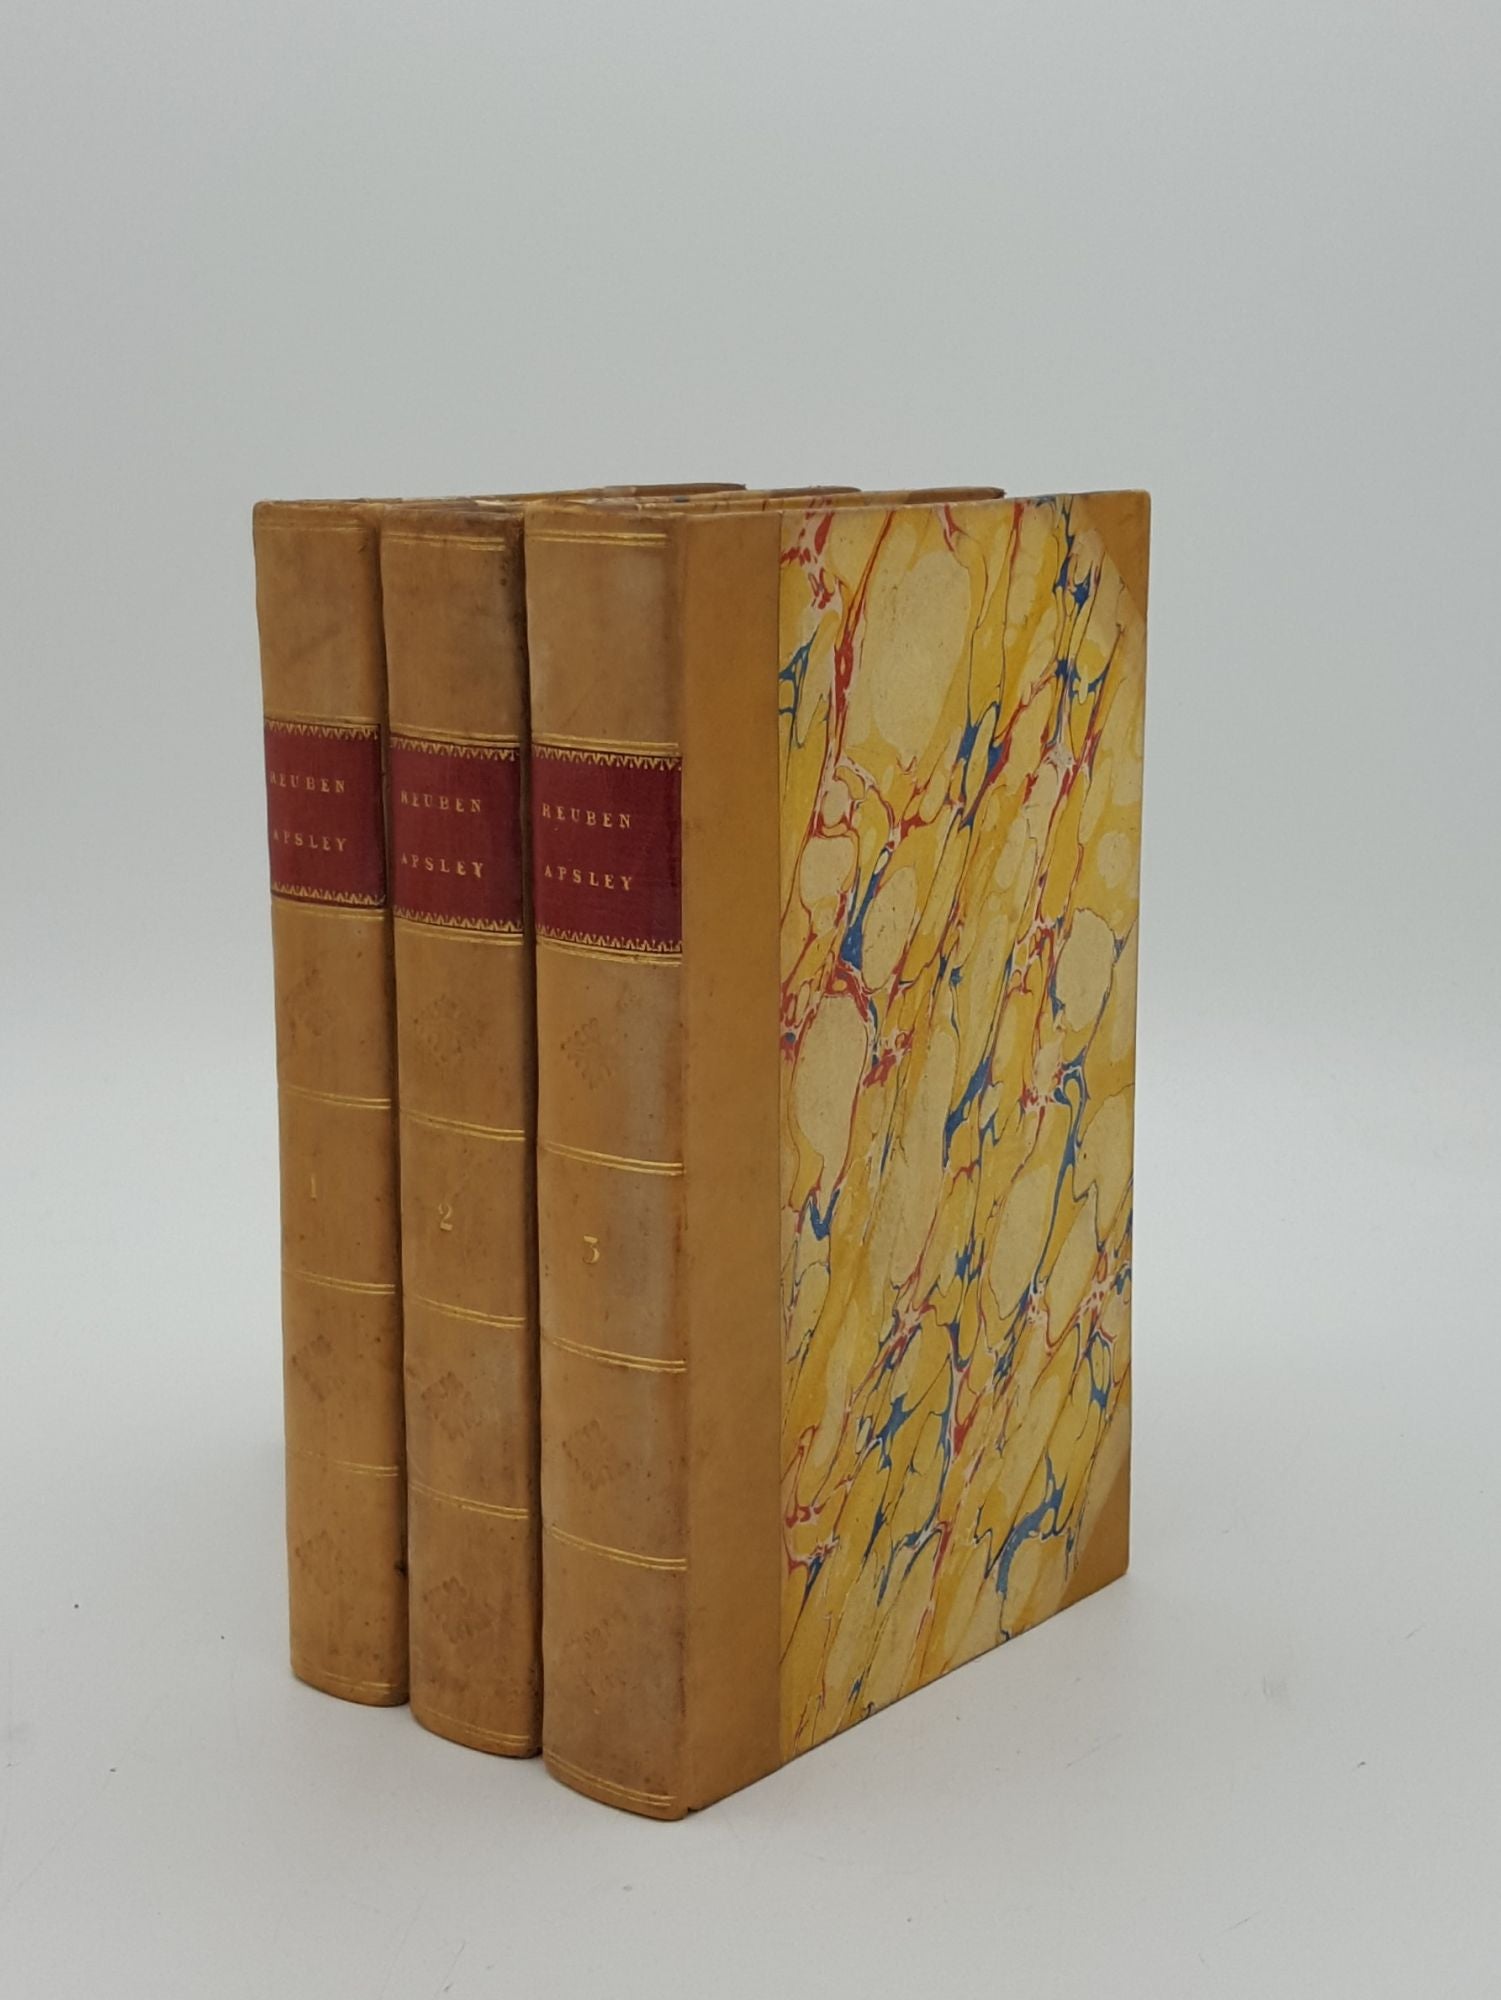 SMITH Horace - Reuben Apsley in Three Volumes